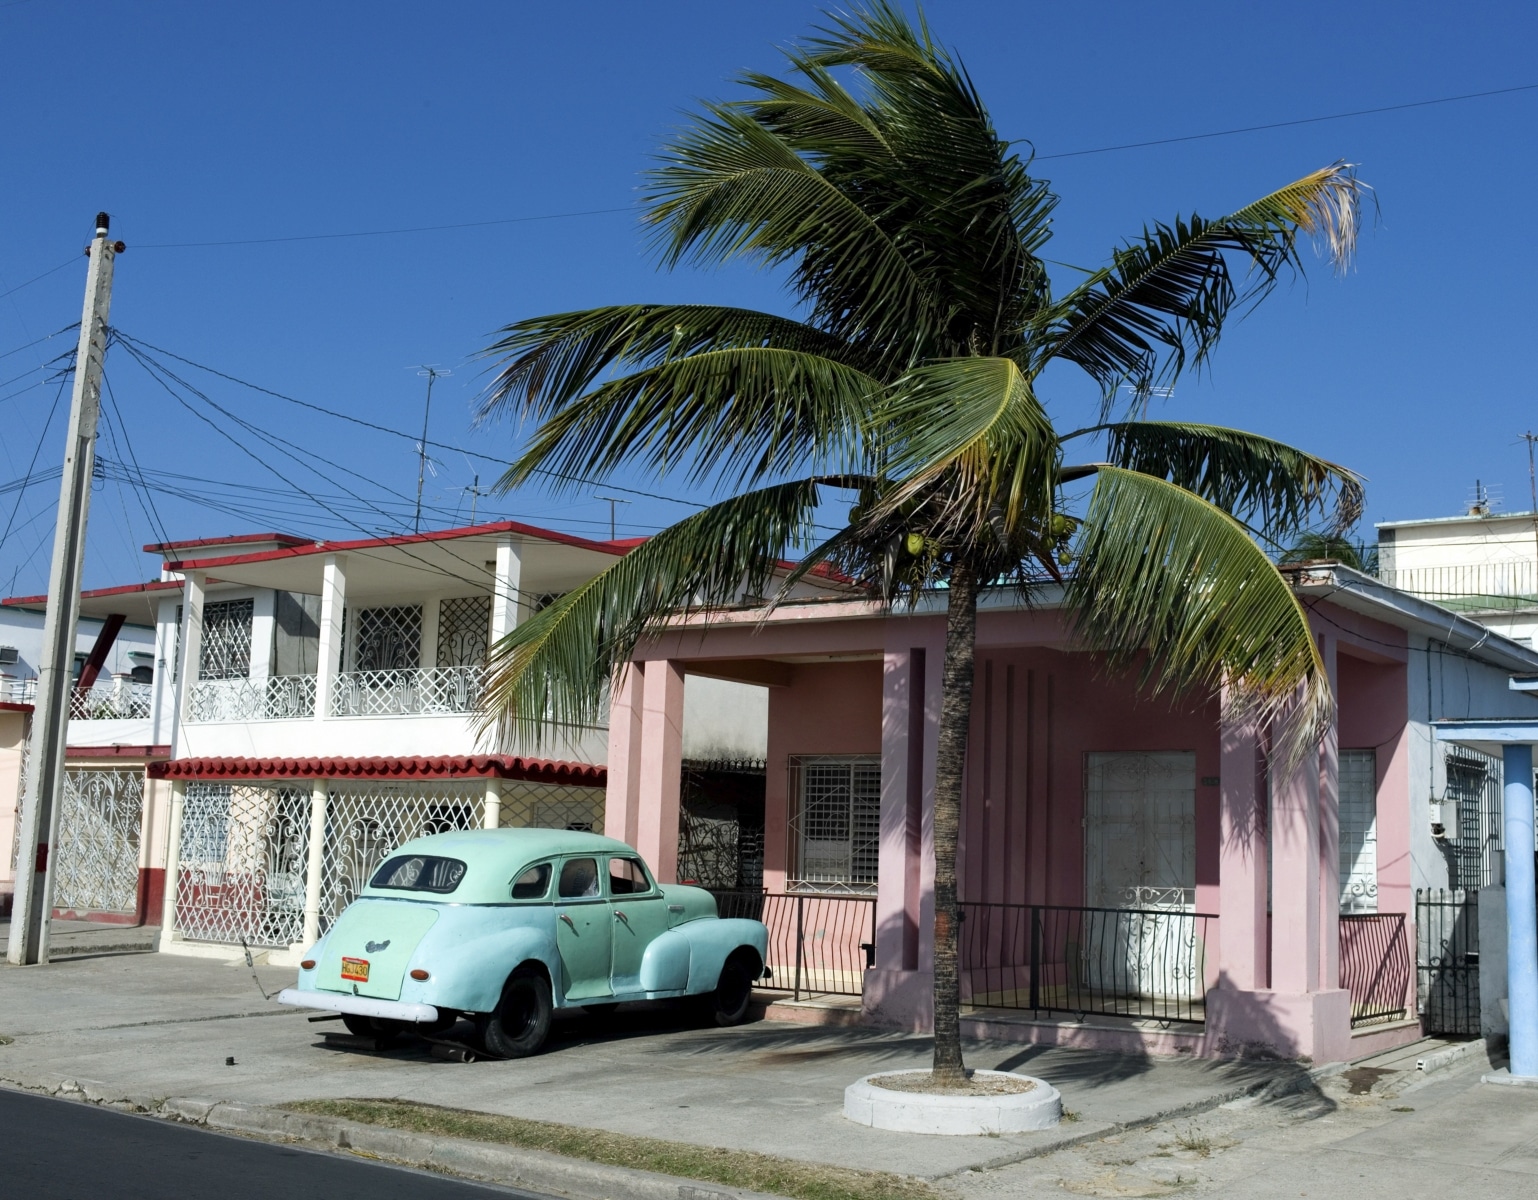 Archetypal Cuba-Blue Car, Pink House, Palm Tree